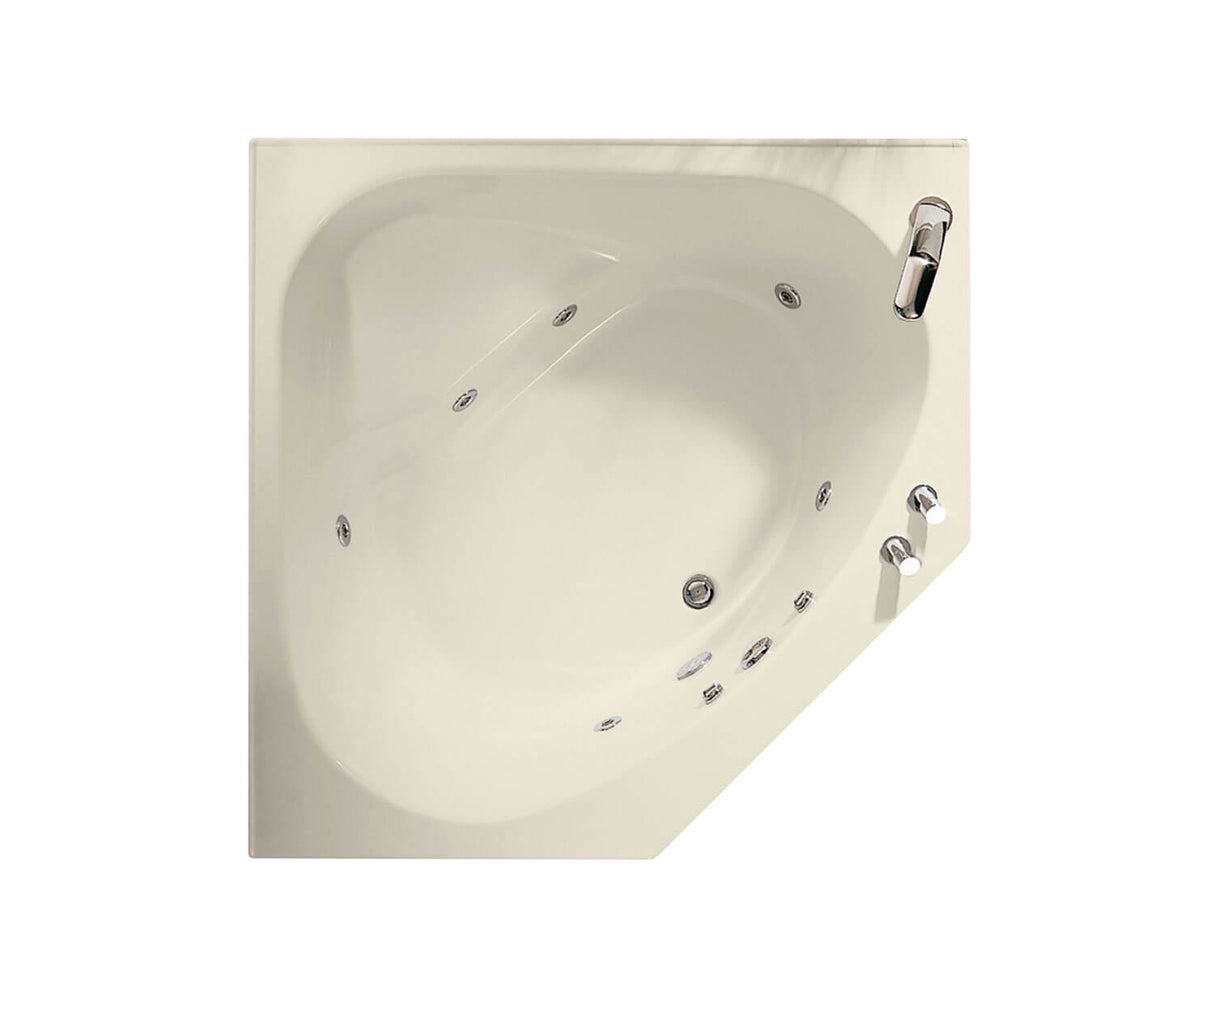 MAAX 100875-RL-103-004 Tandem 5454 Acrylic Corner Center Drain Aeroeffect Bathtub in Bone